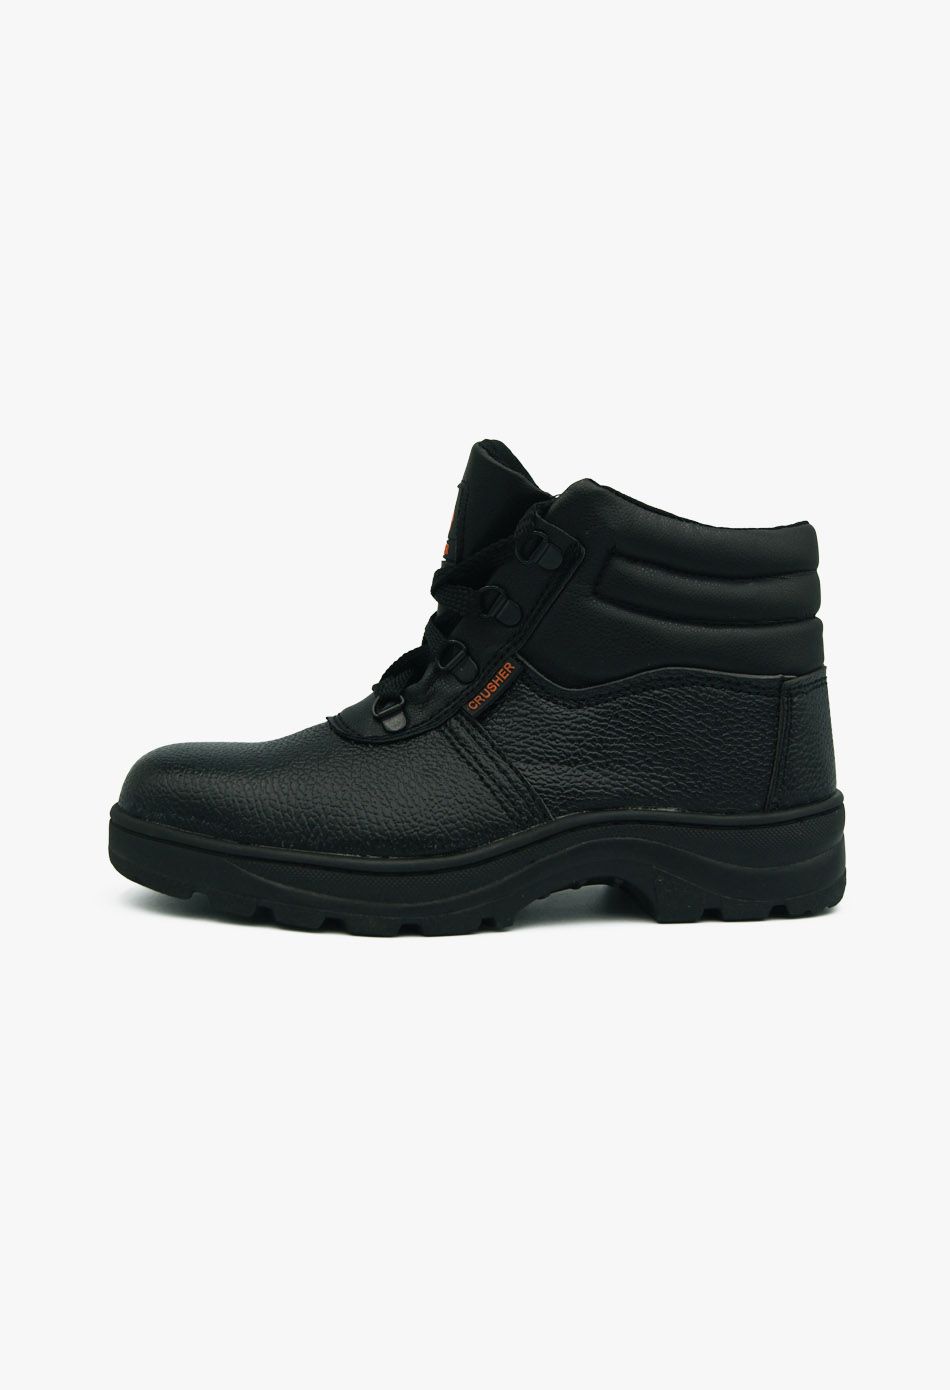 Suede Ανδρικά Boat Shoes σε Μαύρο Χρώμα / A86-Black ΑΝΔΡΙΚΑ ΠΑΠΟΥΤΣΙΑ joya.gr